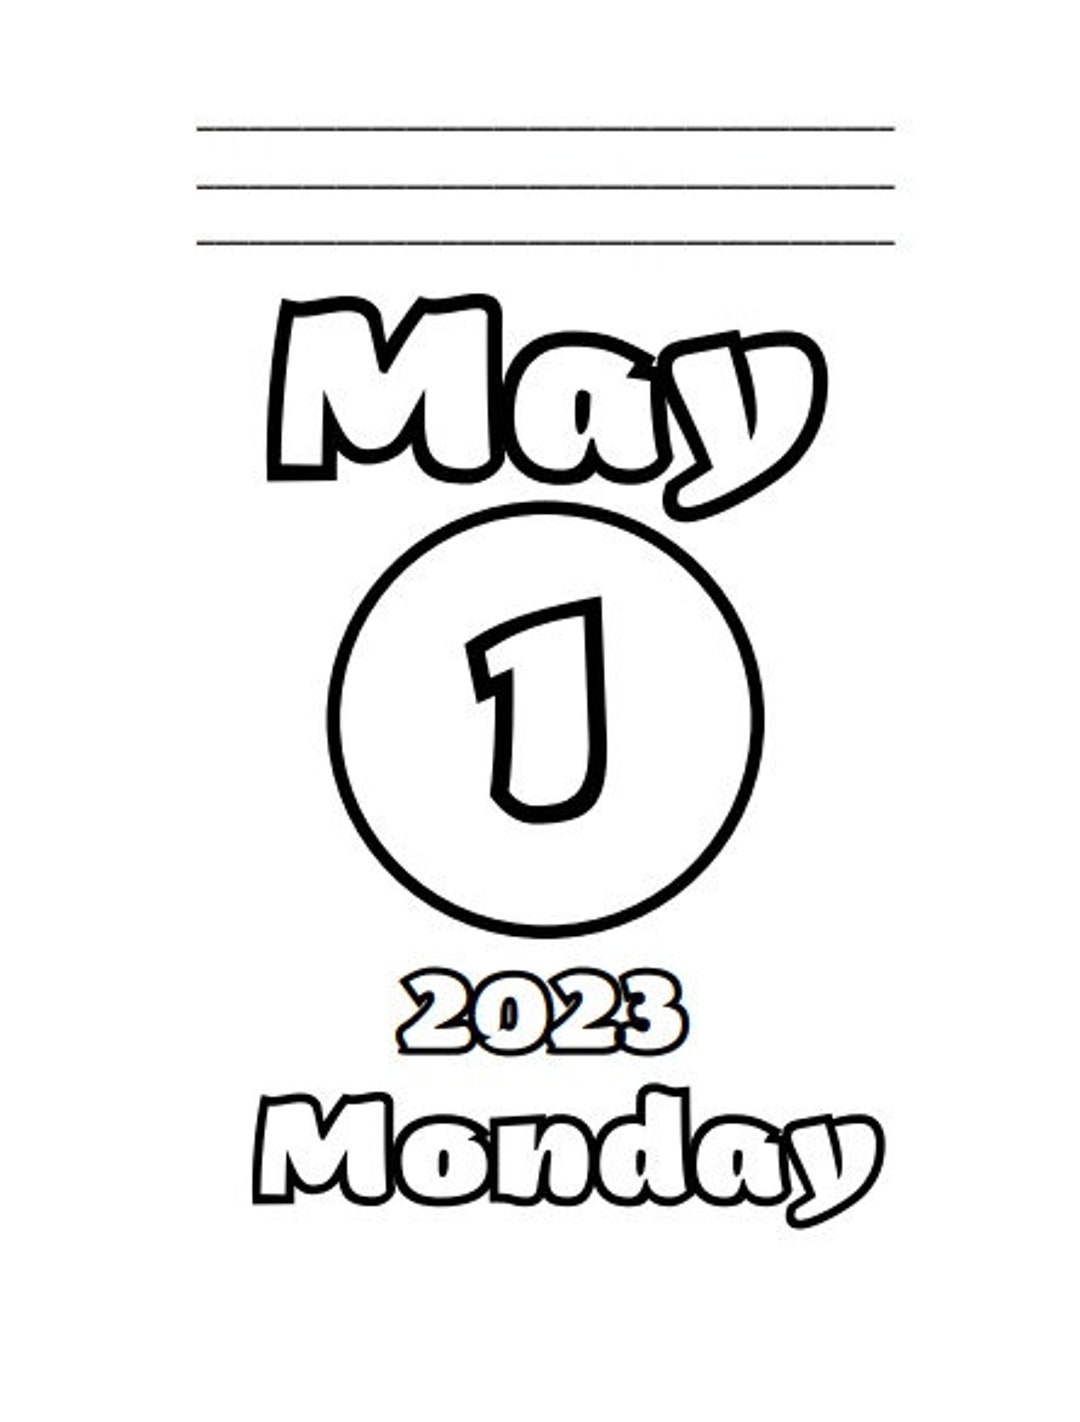 printable-calendar-worksheets-pdf-calendar-tear-away-day-by-etsy